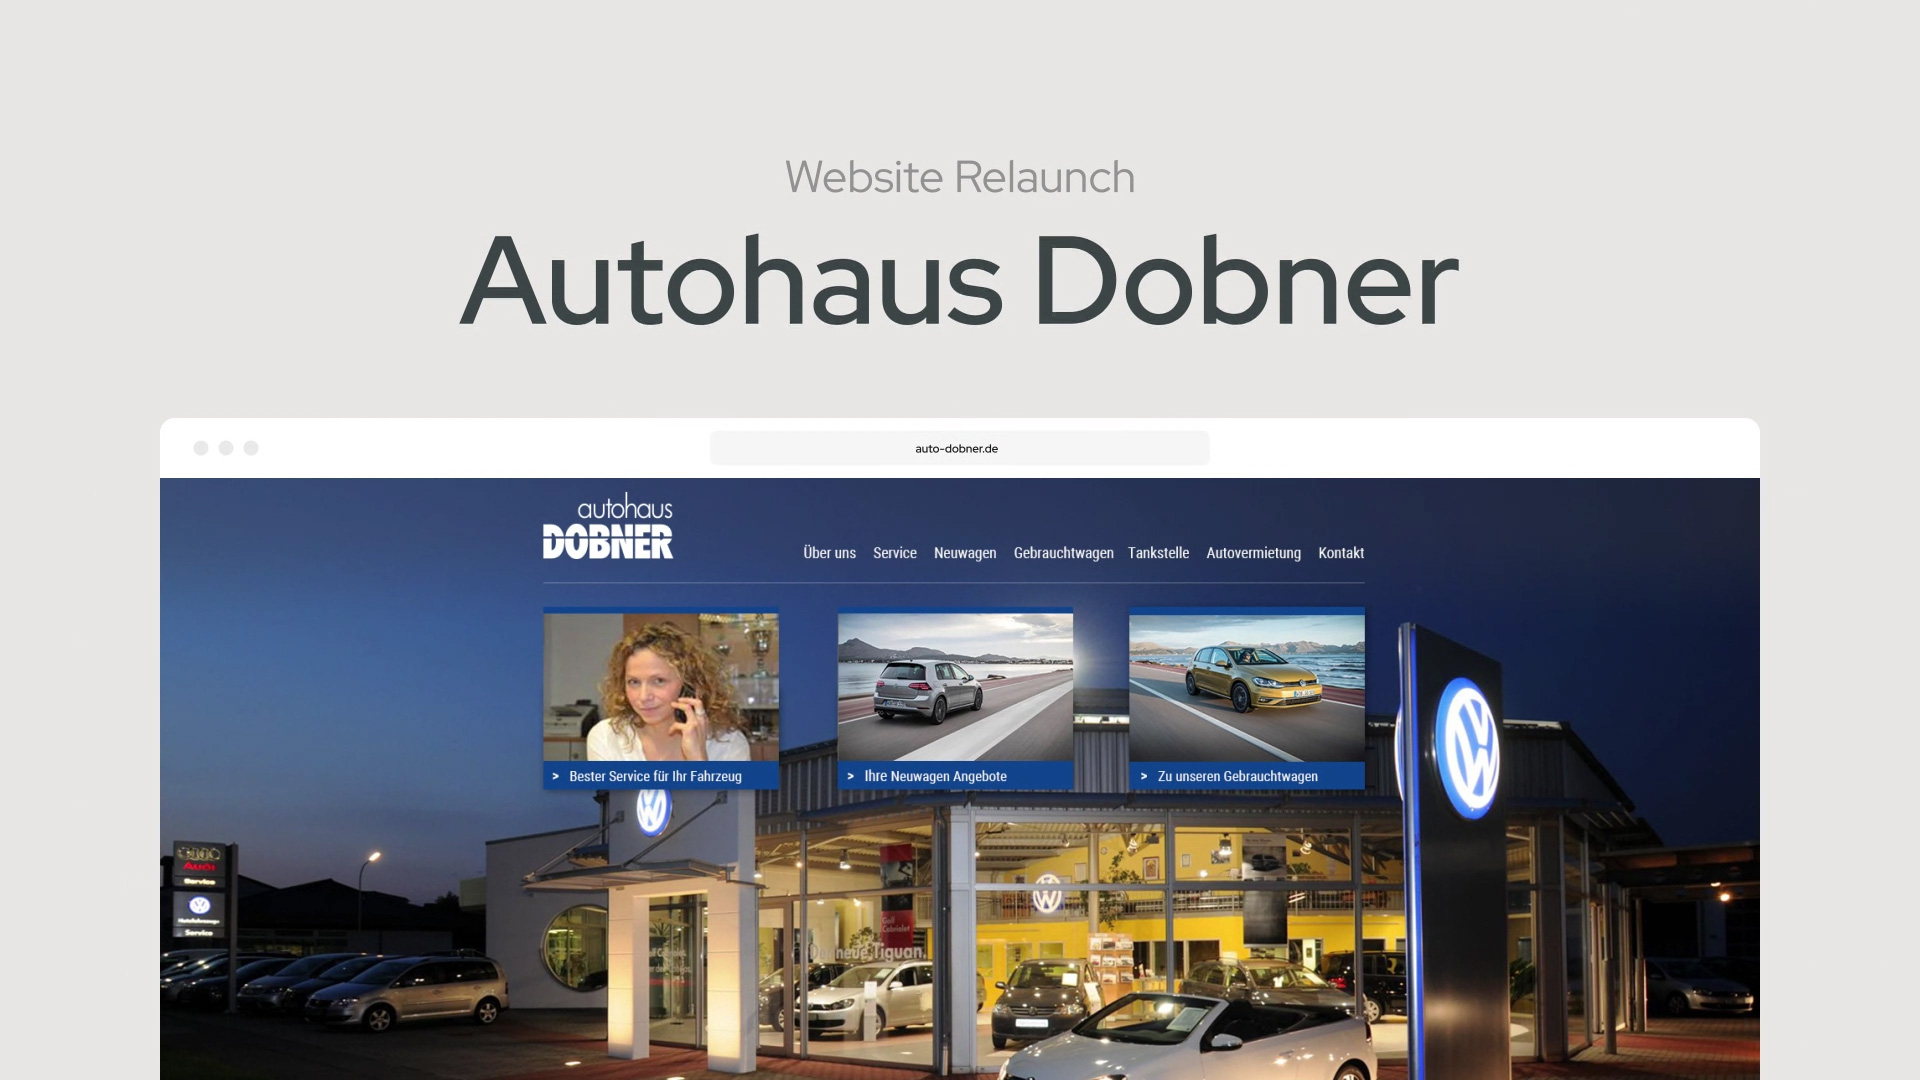 Autohaus Dobner | Website Relaunch - Case Study